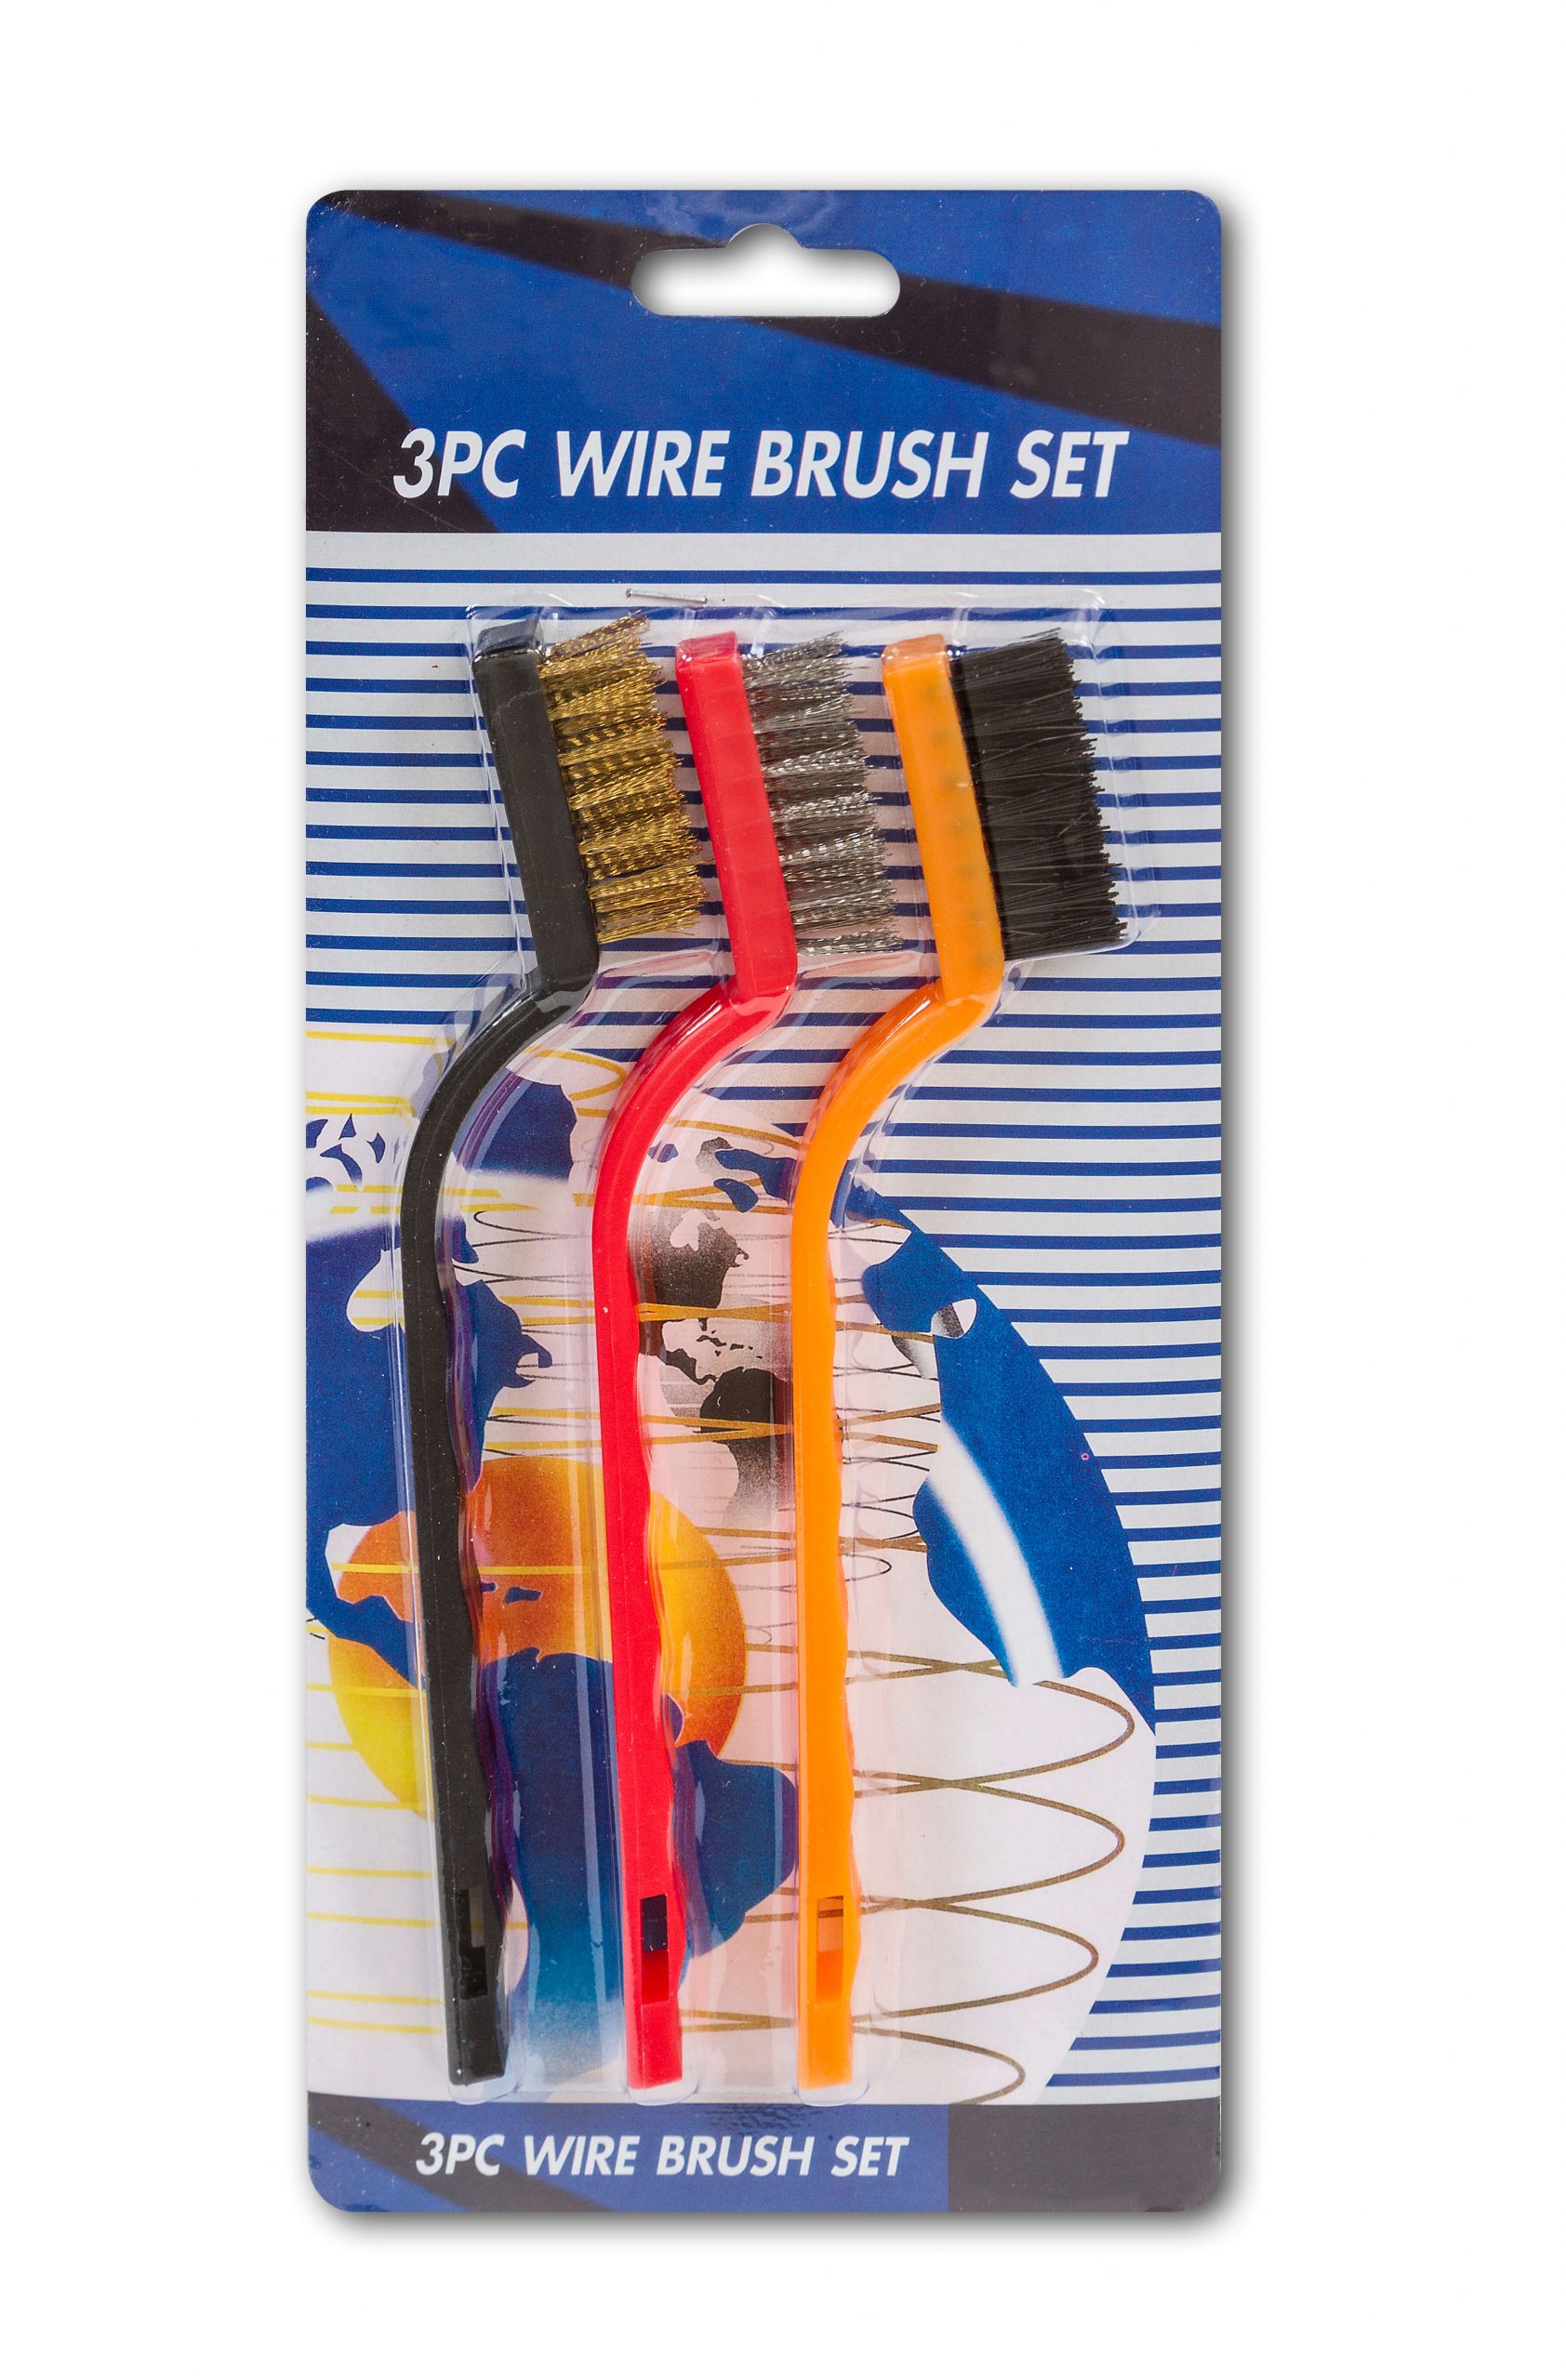 3pc wire brush set